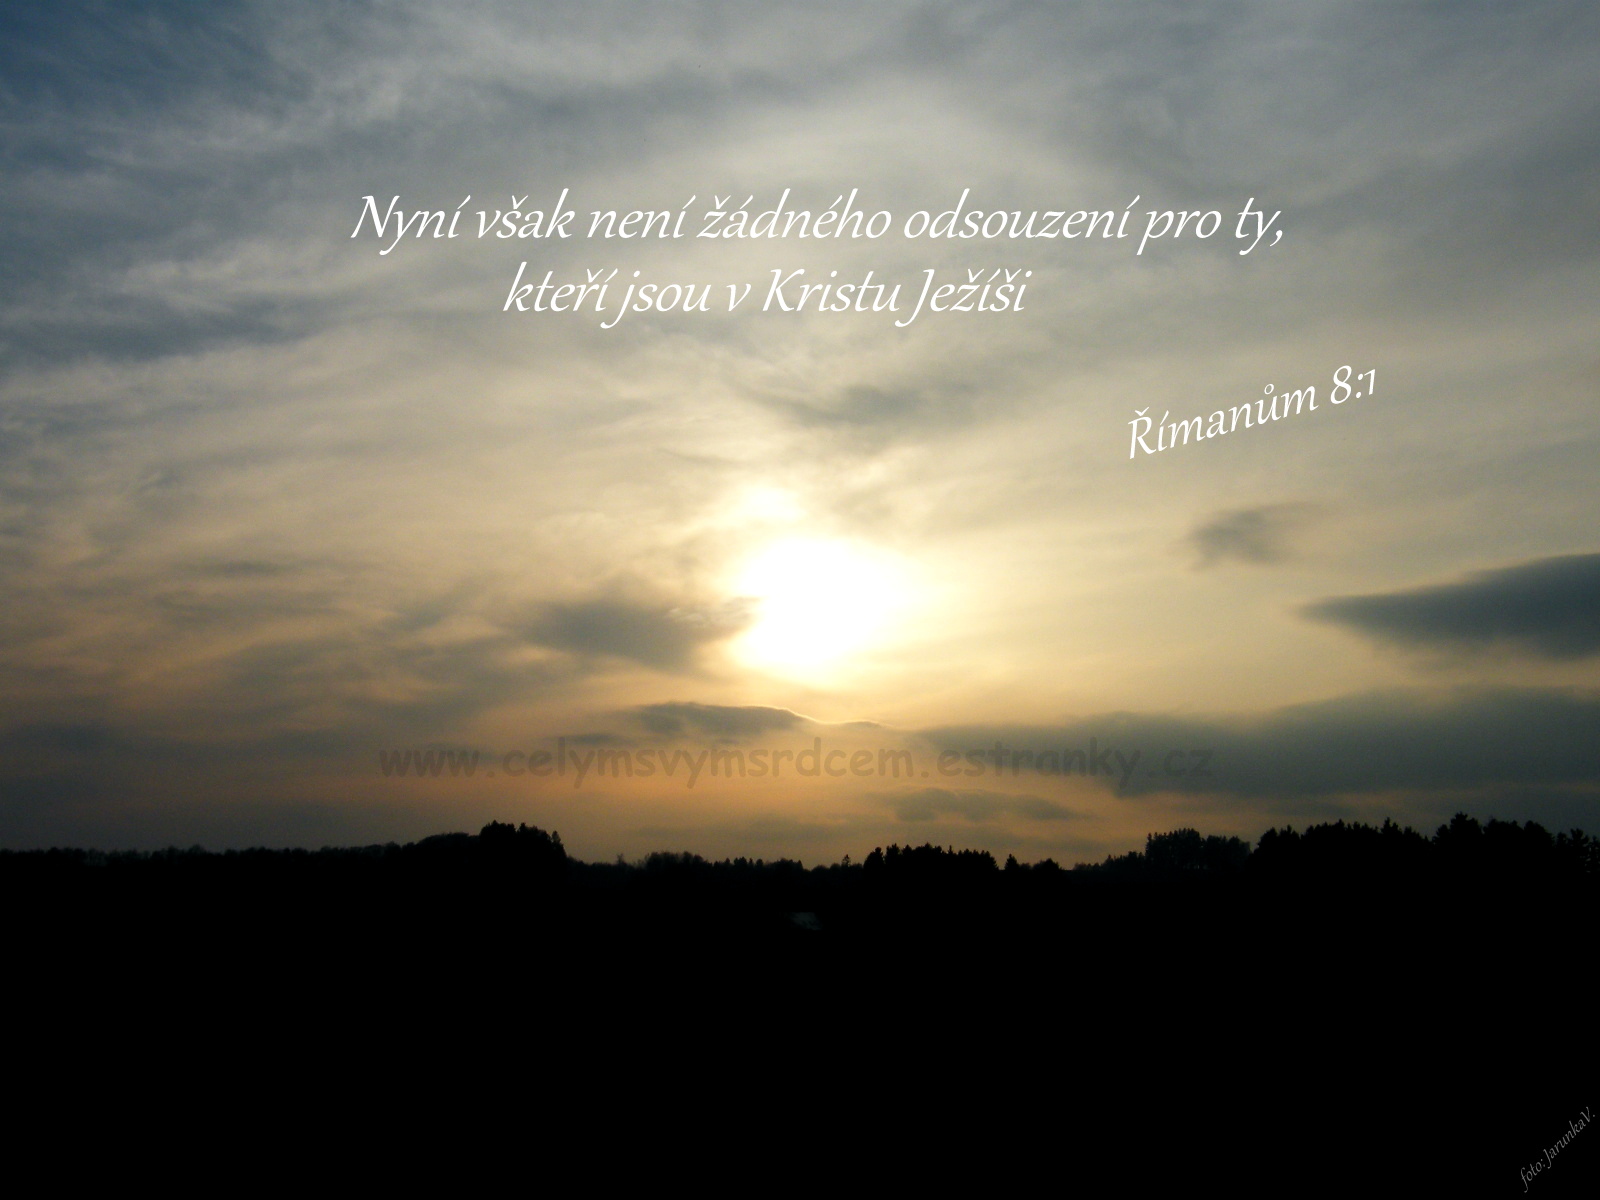 Římanům 8:1